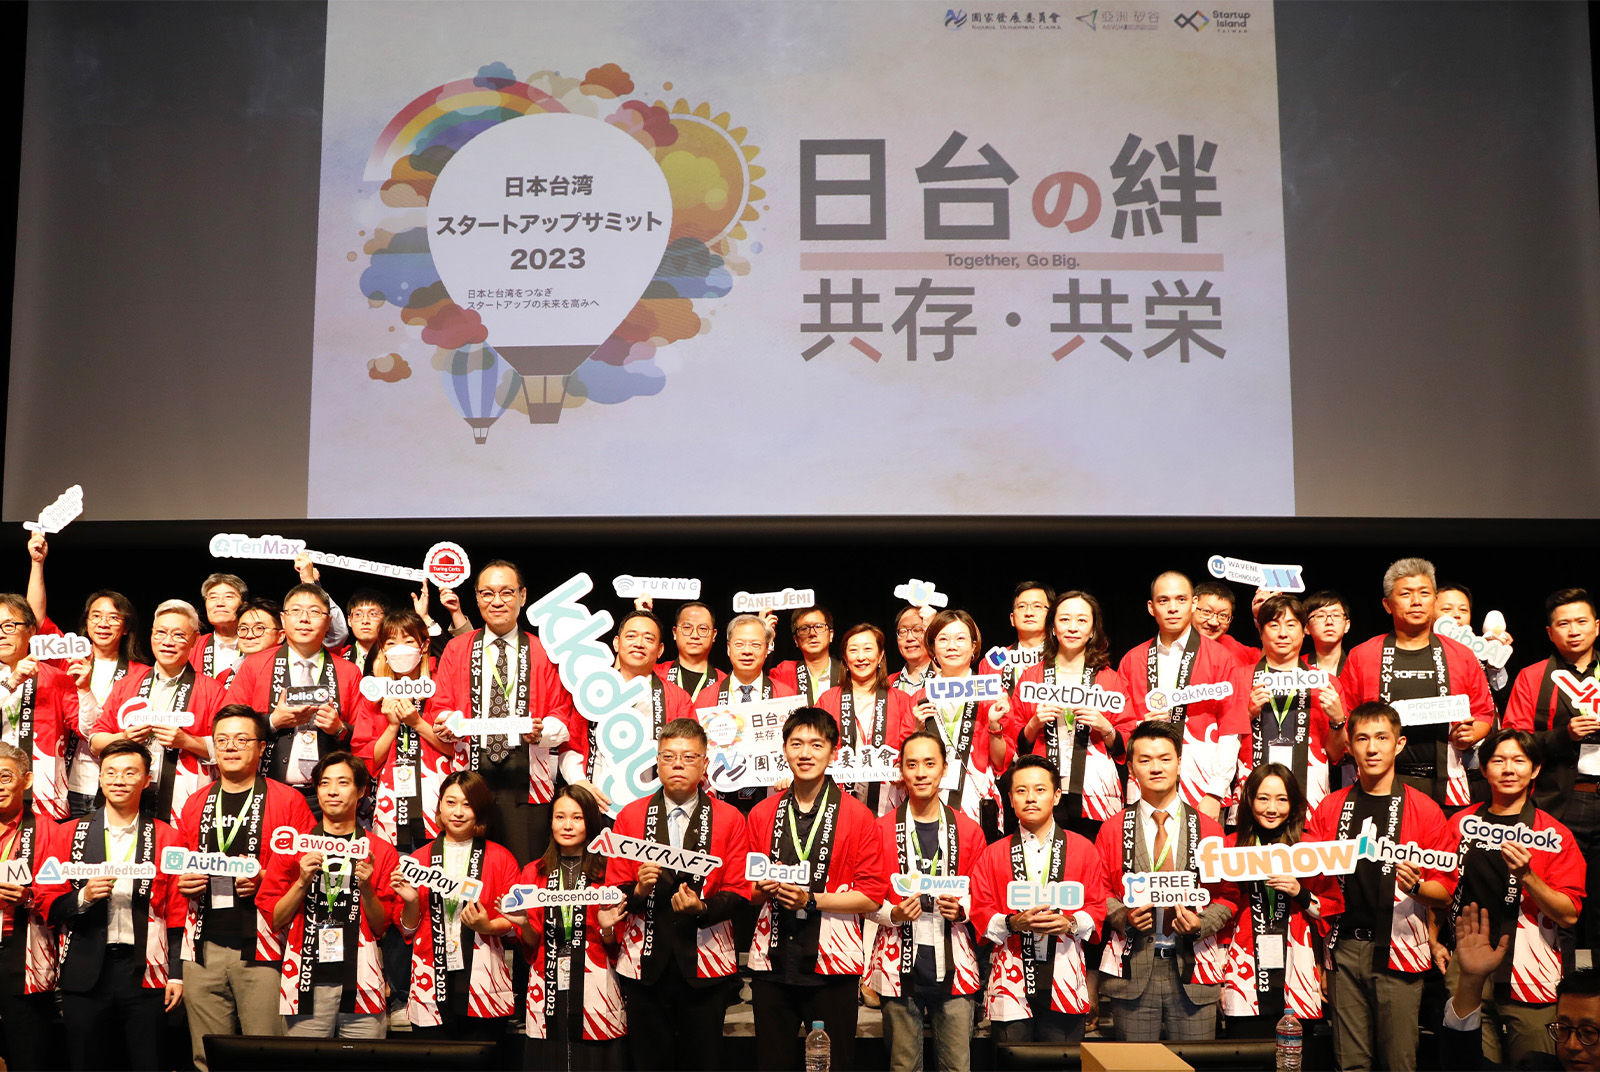 Description／2023 Together, Go Big. Japan-Taiwan Startup Summit